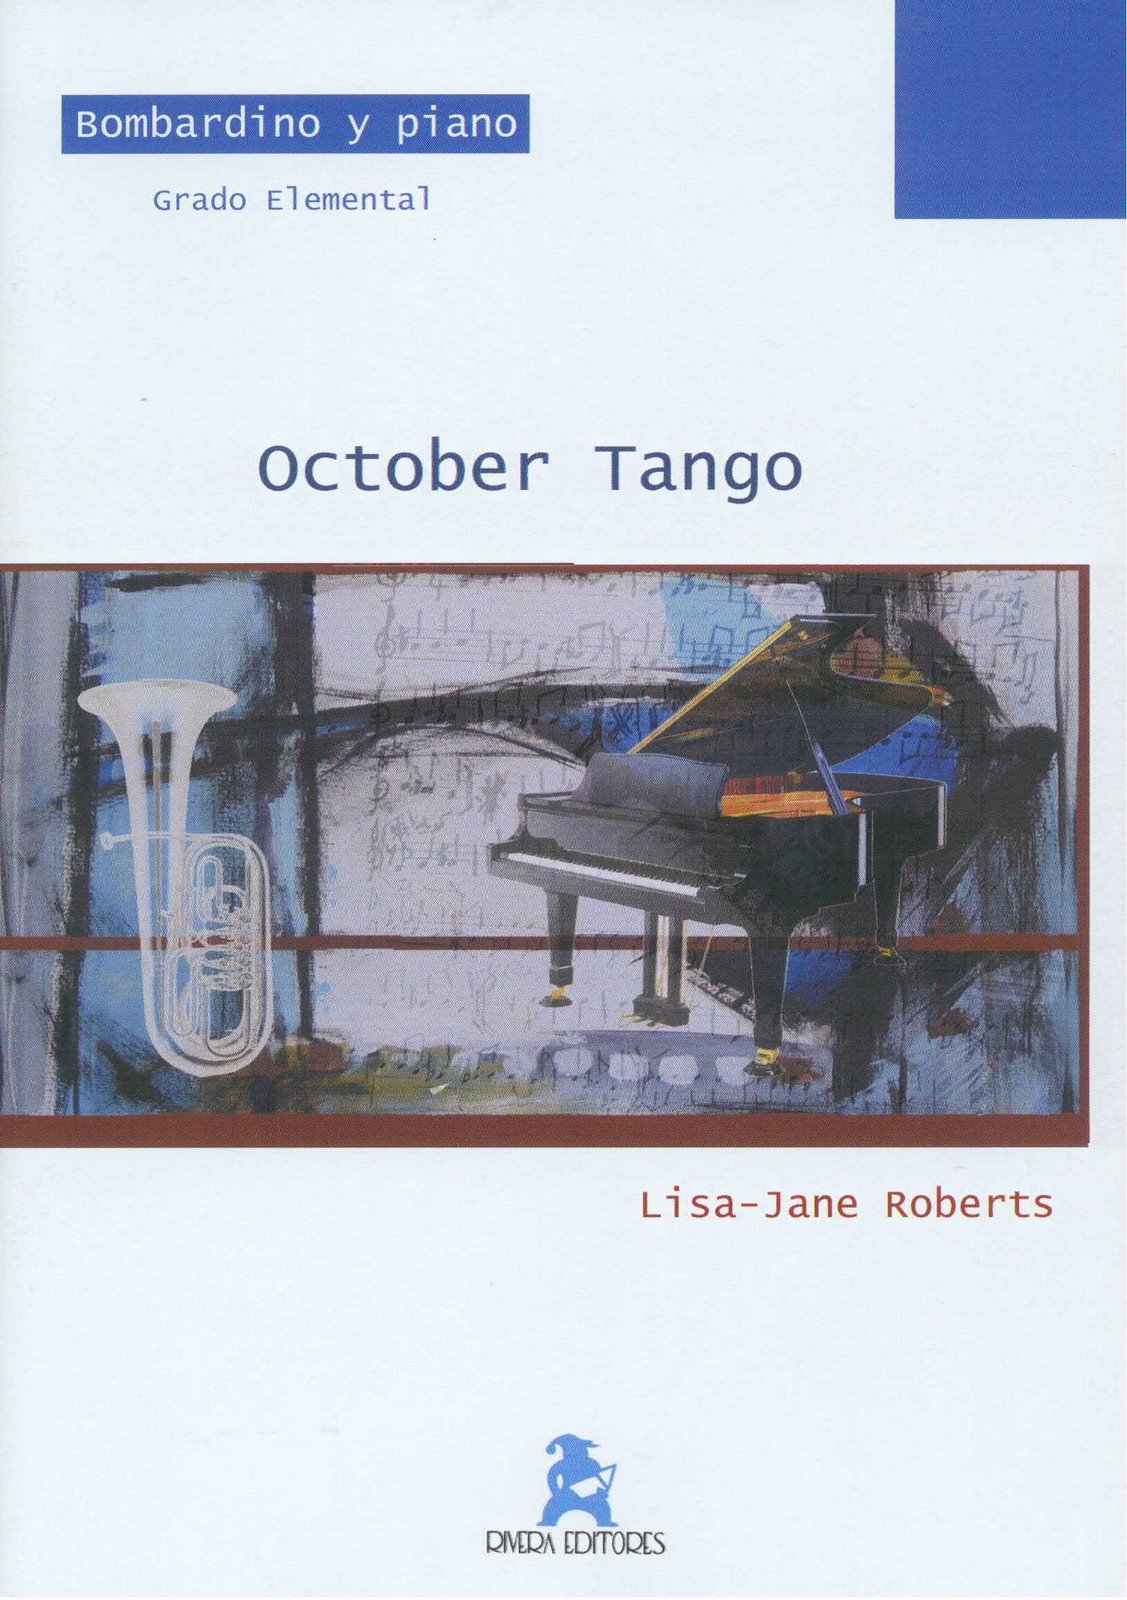 [cover+tango.jpg]